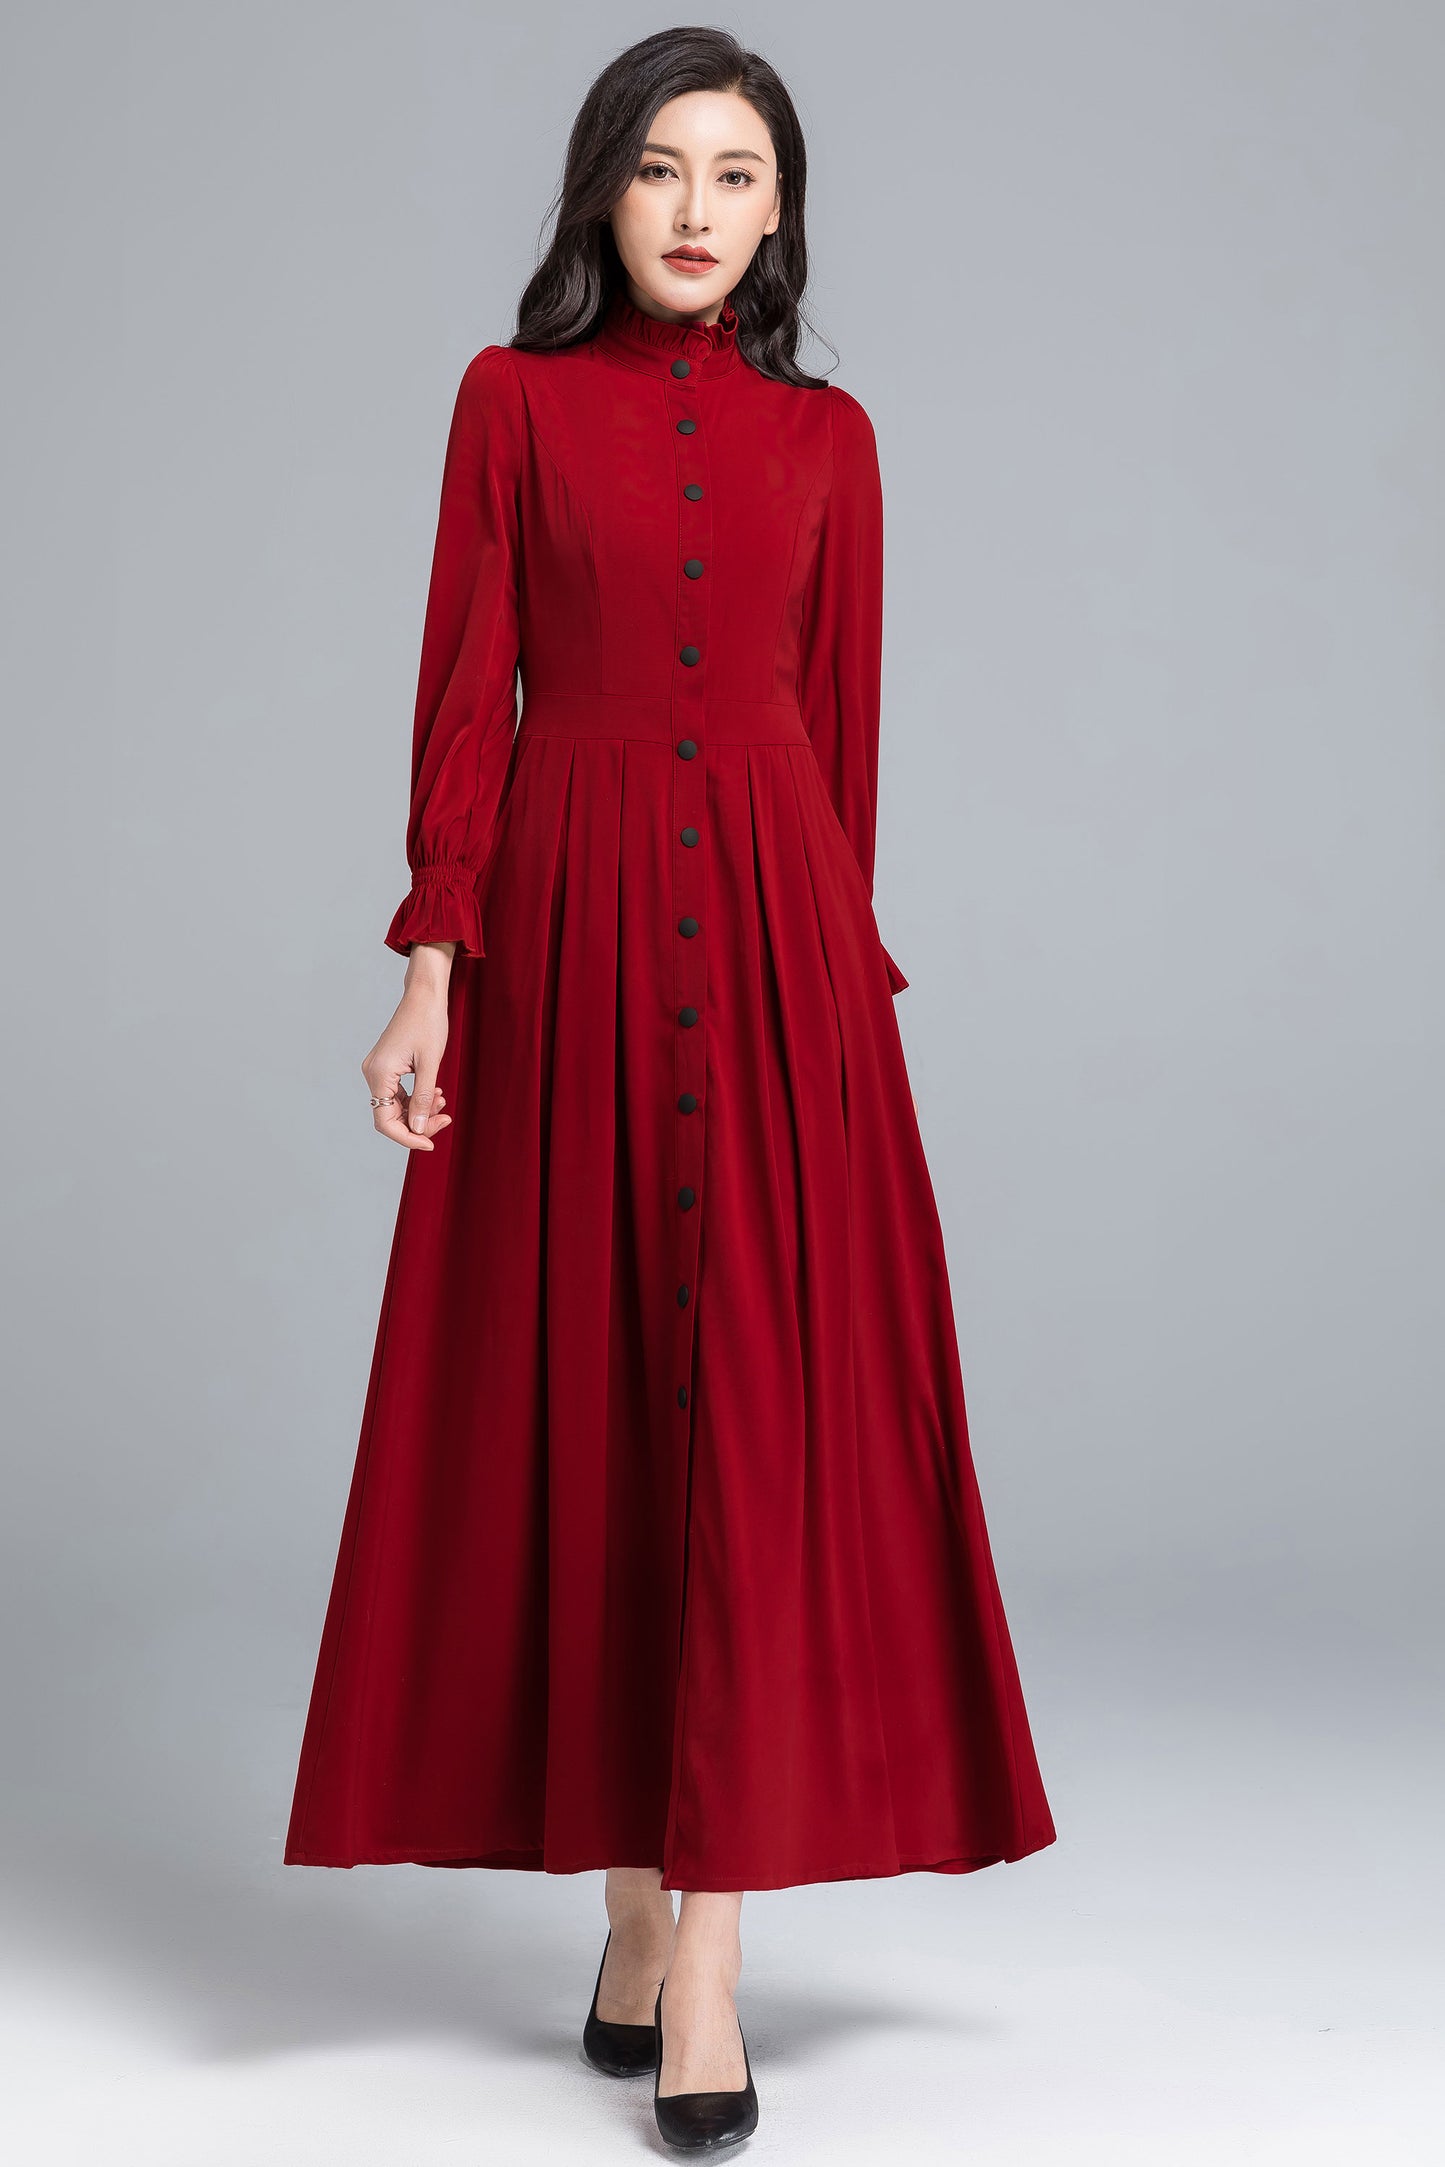 Long sleeve red maxi dress 2489